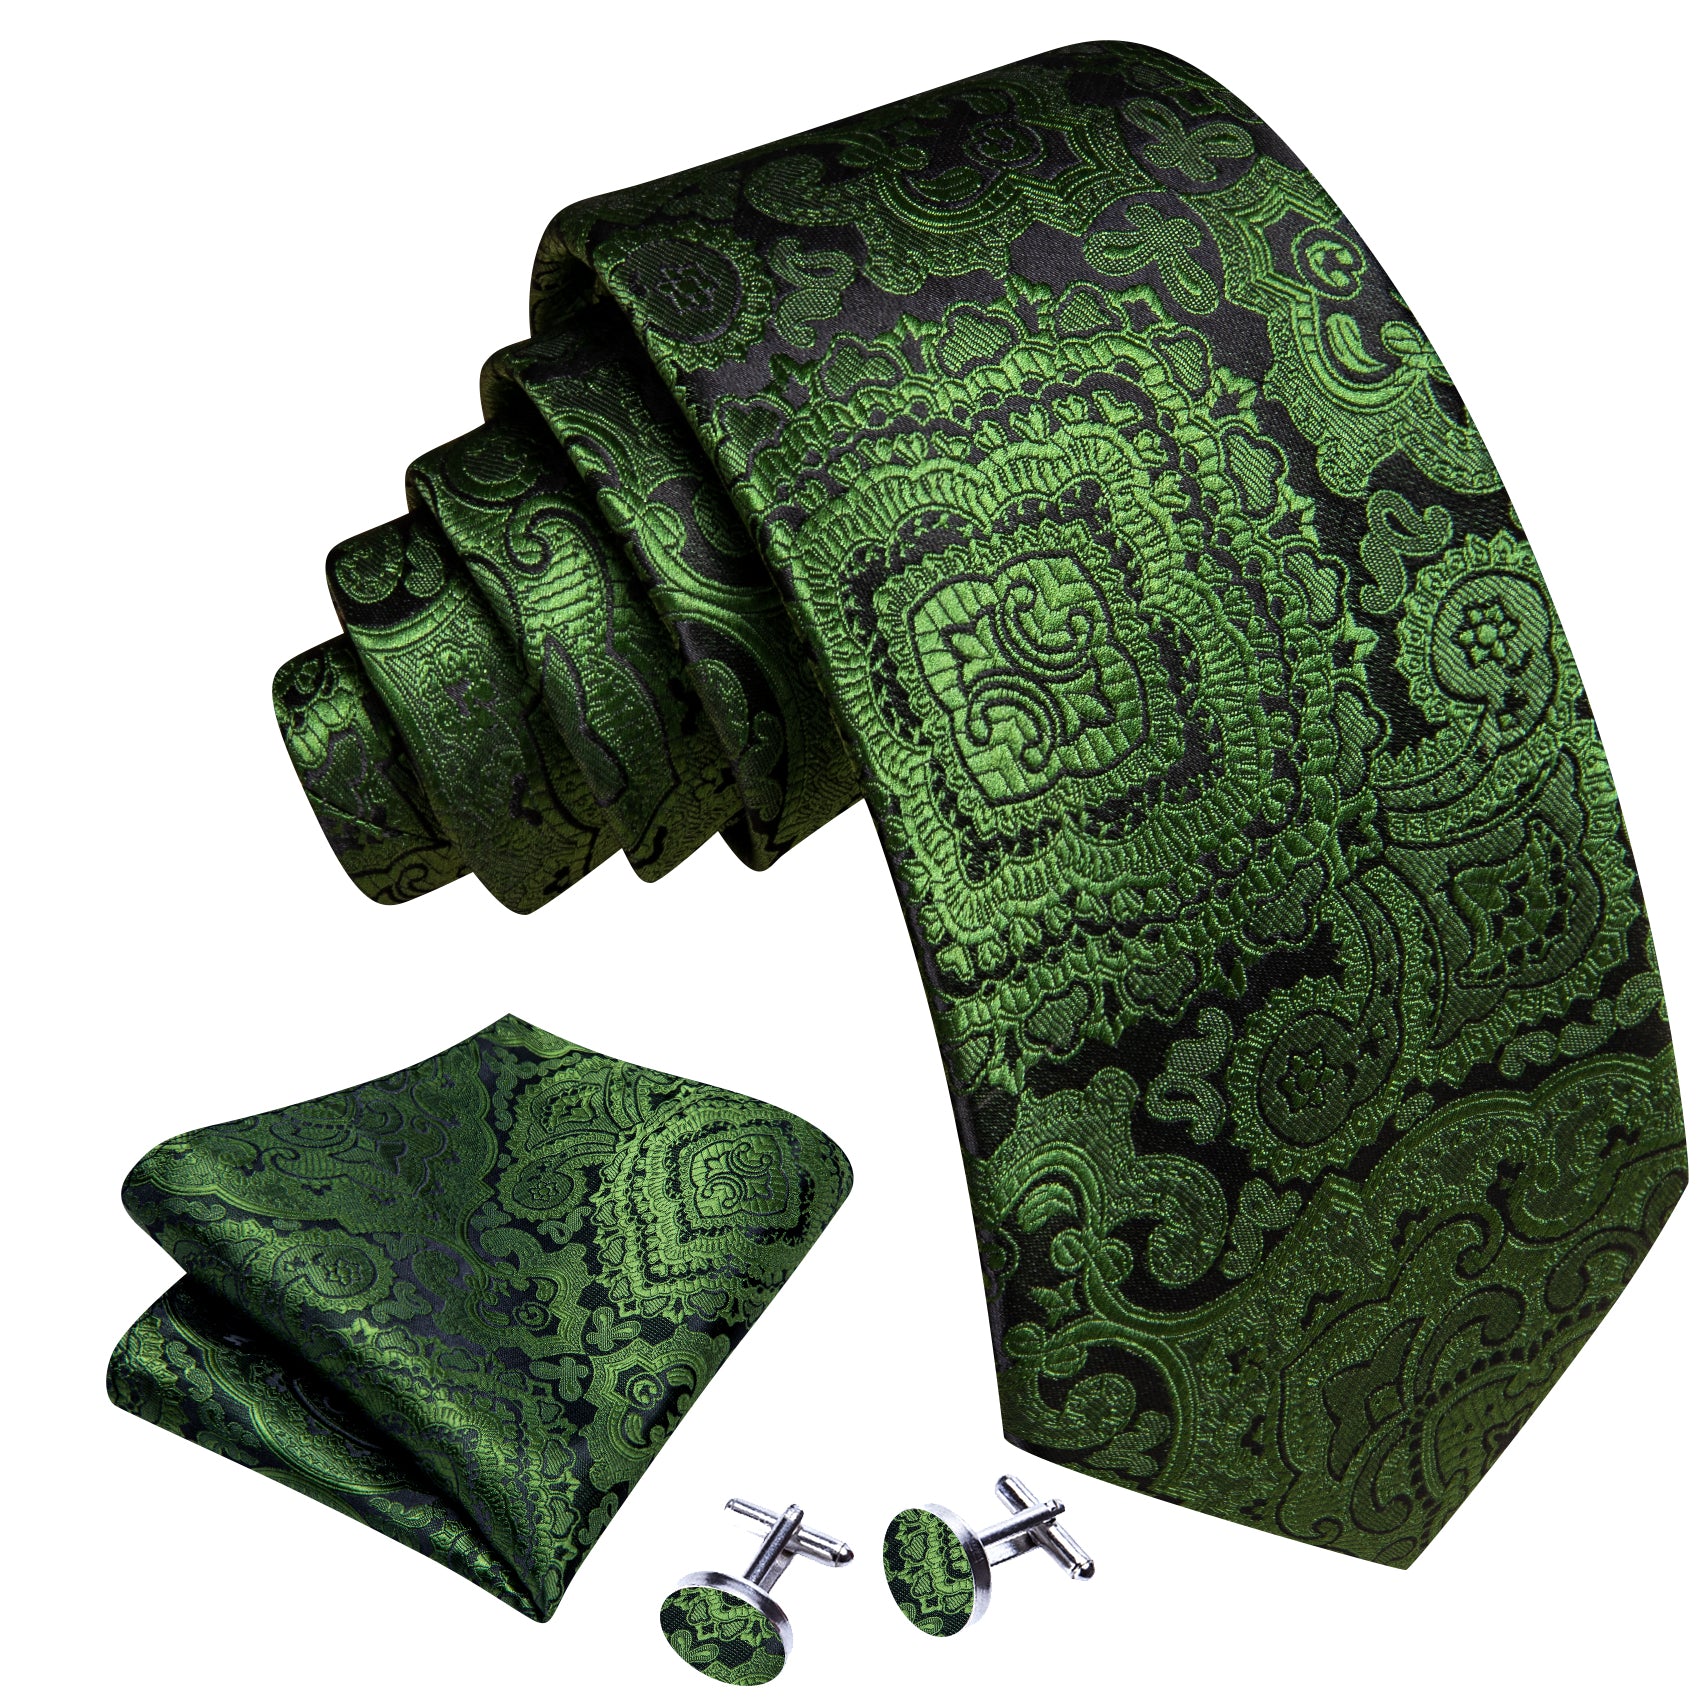 Olivedrab Paisley Silk Tie Handkerchief Cufflinks Set